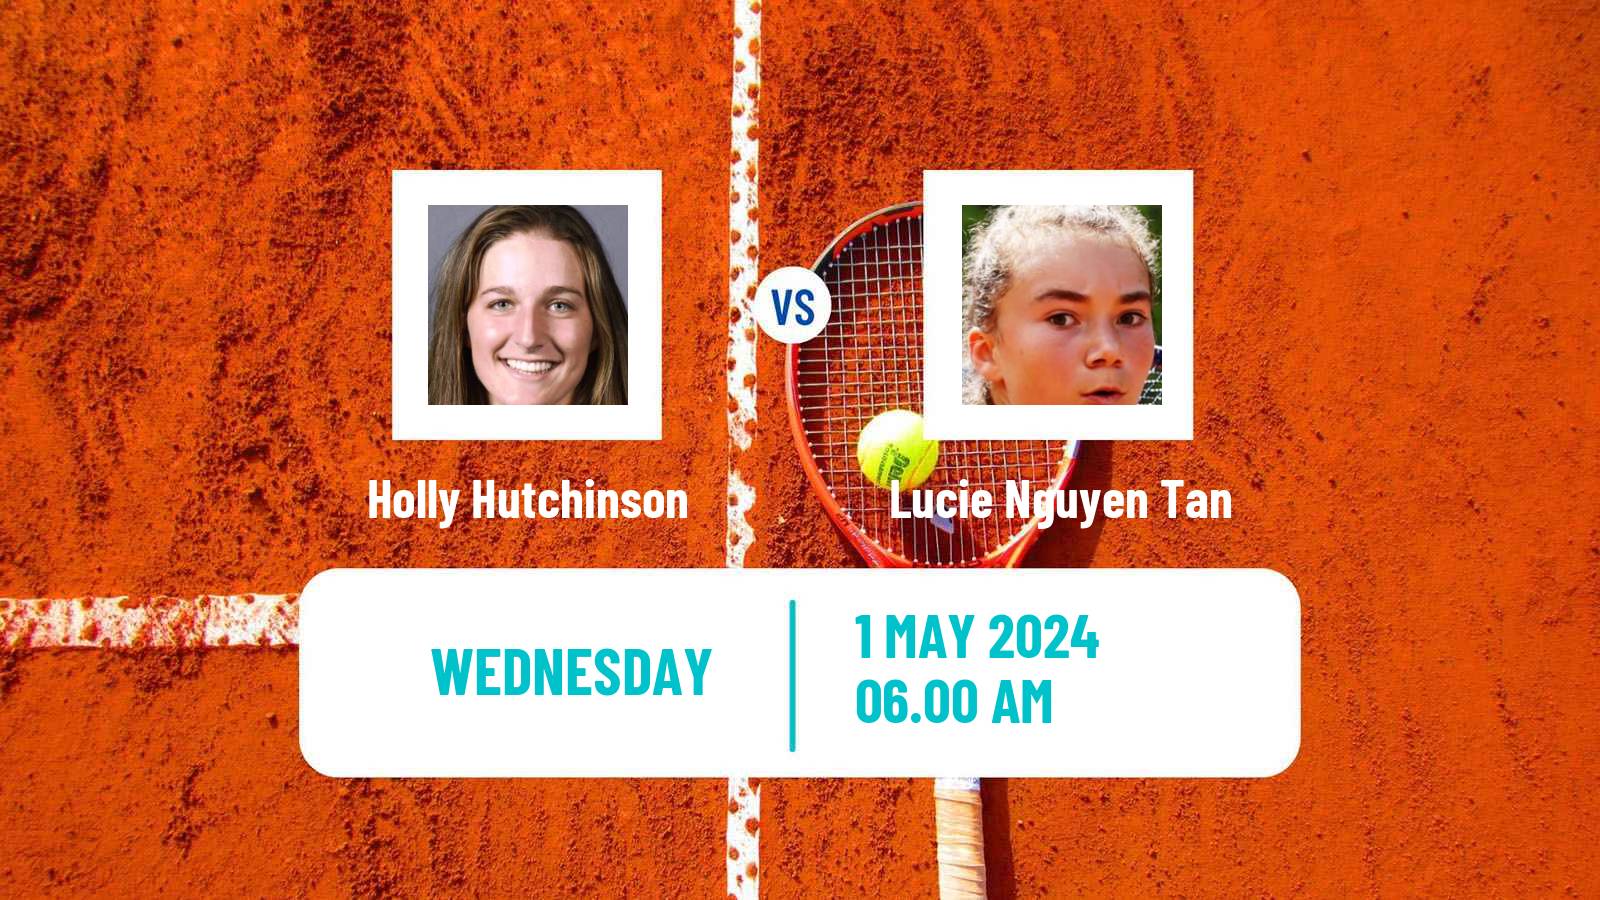 Tennis ITF W35 Nottingham 2 Women Holly Hutchinson - Lucie Nguyen Tan